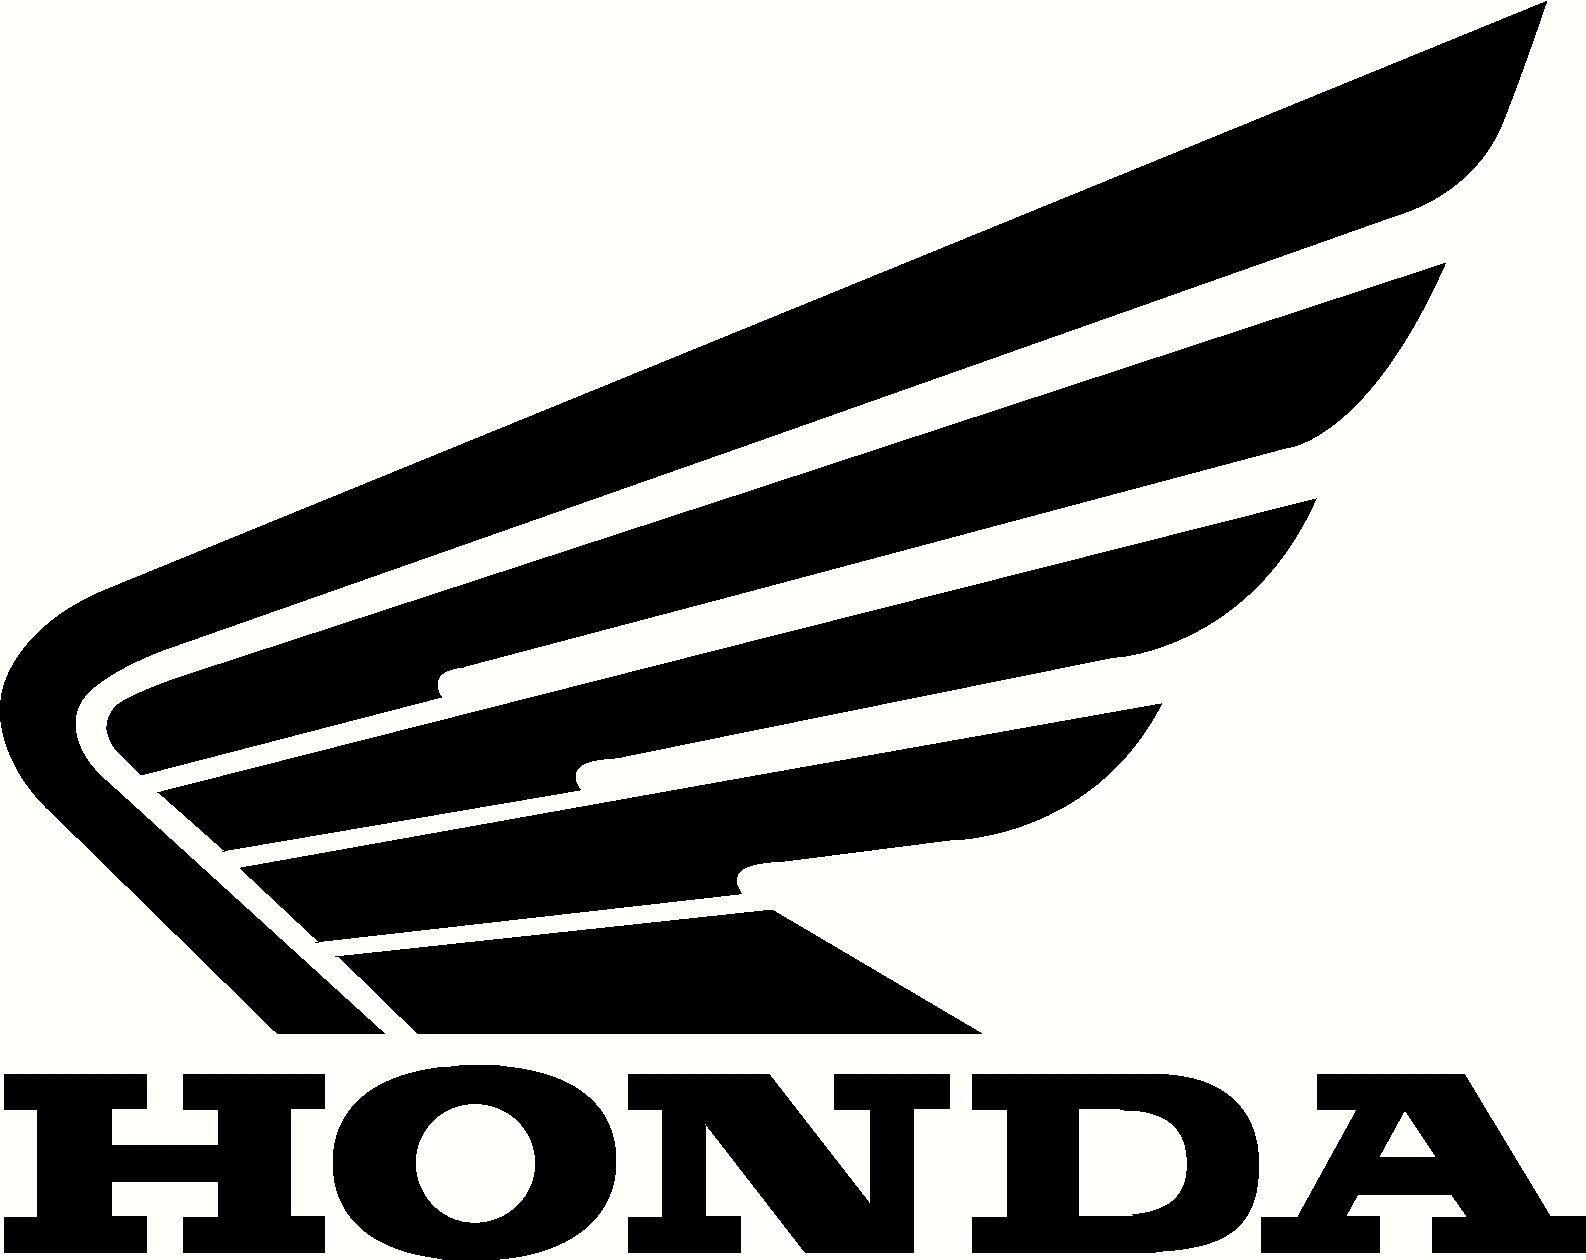 Honda Wing Logo - Pin by Ross Robinson on motorcycles logos | Pinterest | Motorcycle ...